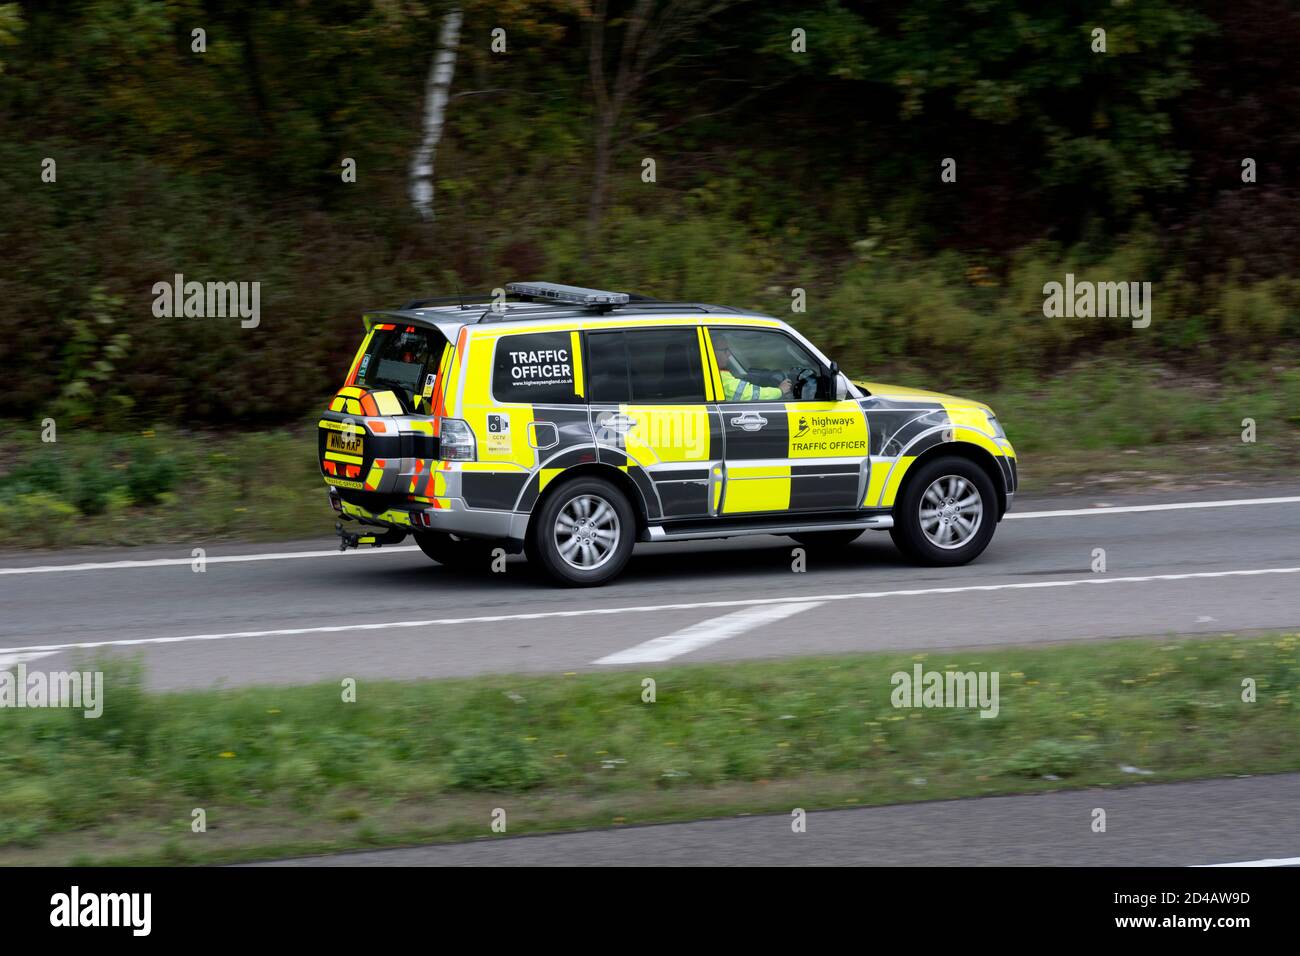 Highways England Traffic Officer vehicle joining M40 motorway at Junction 15, Warwickshire, UK Stock Photo